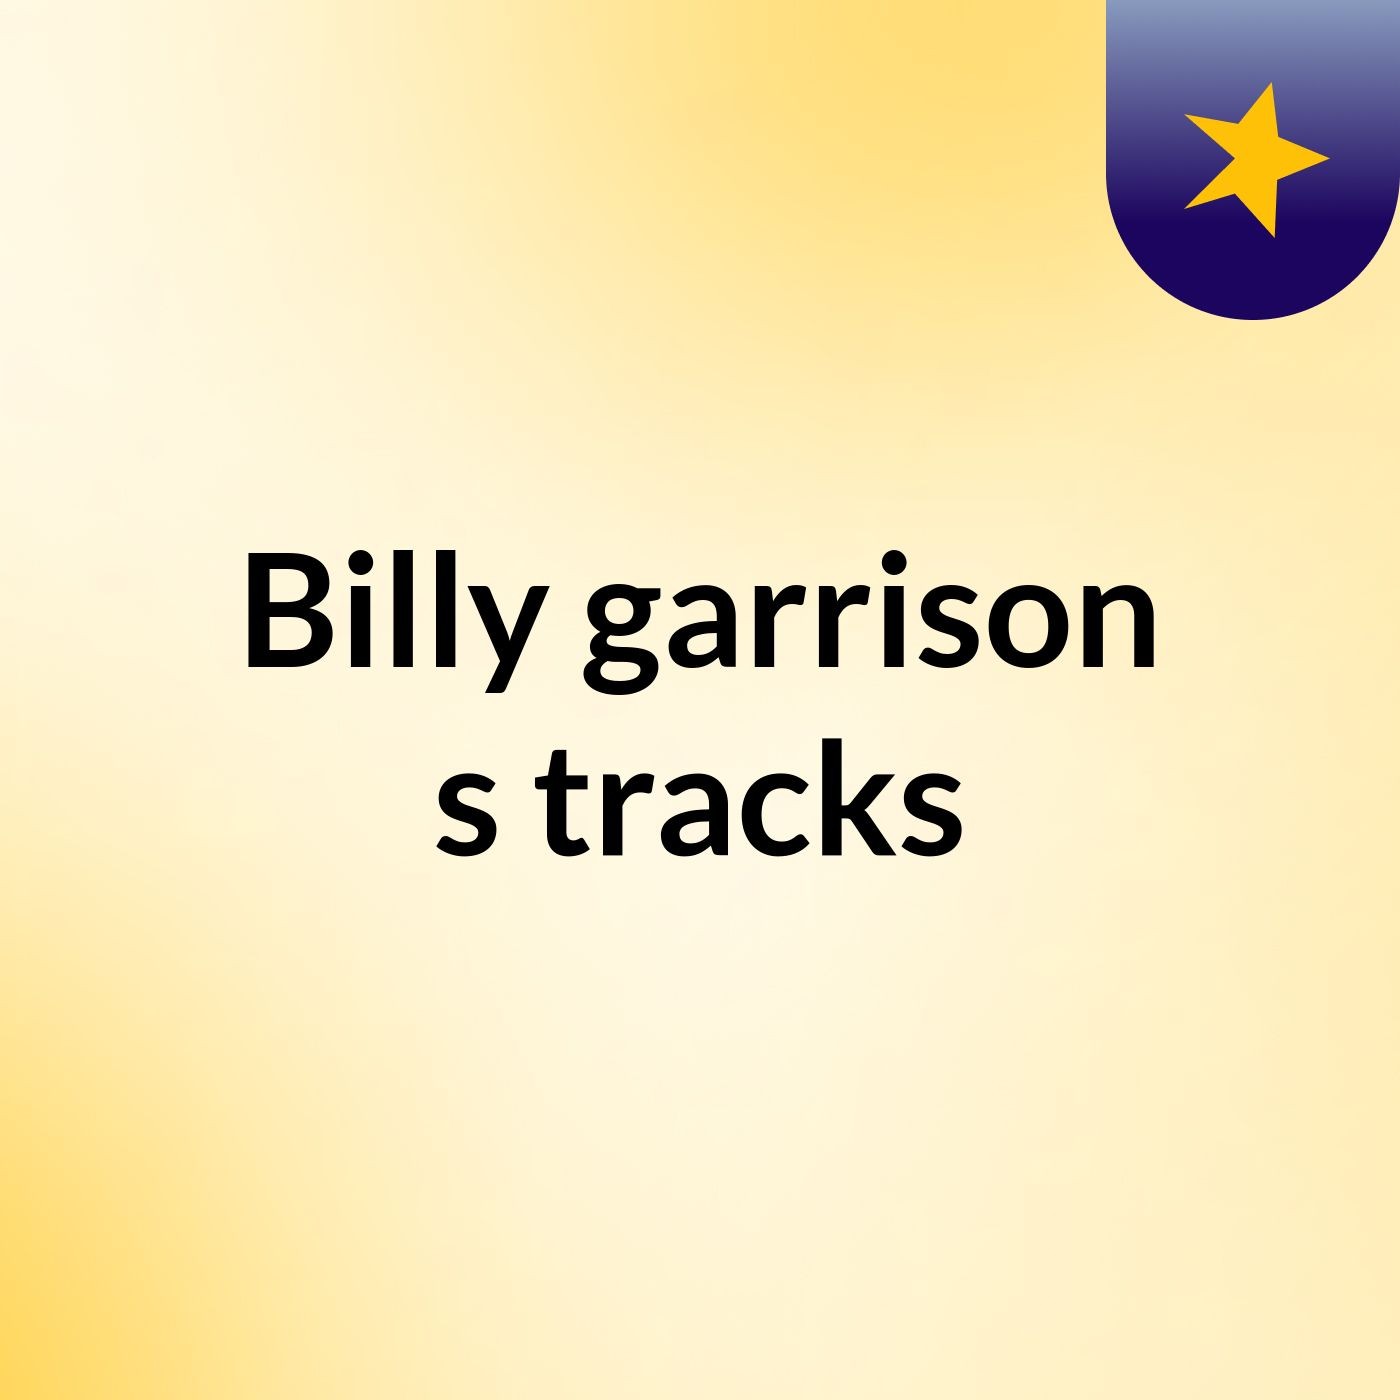 Billy garrison's tracks